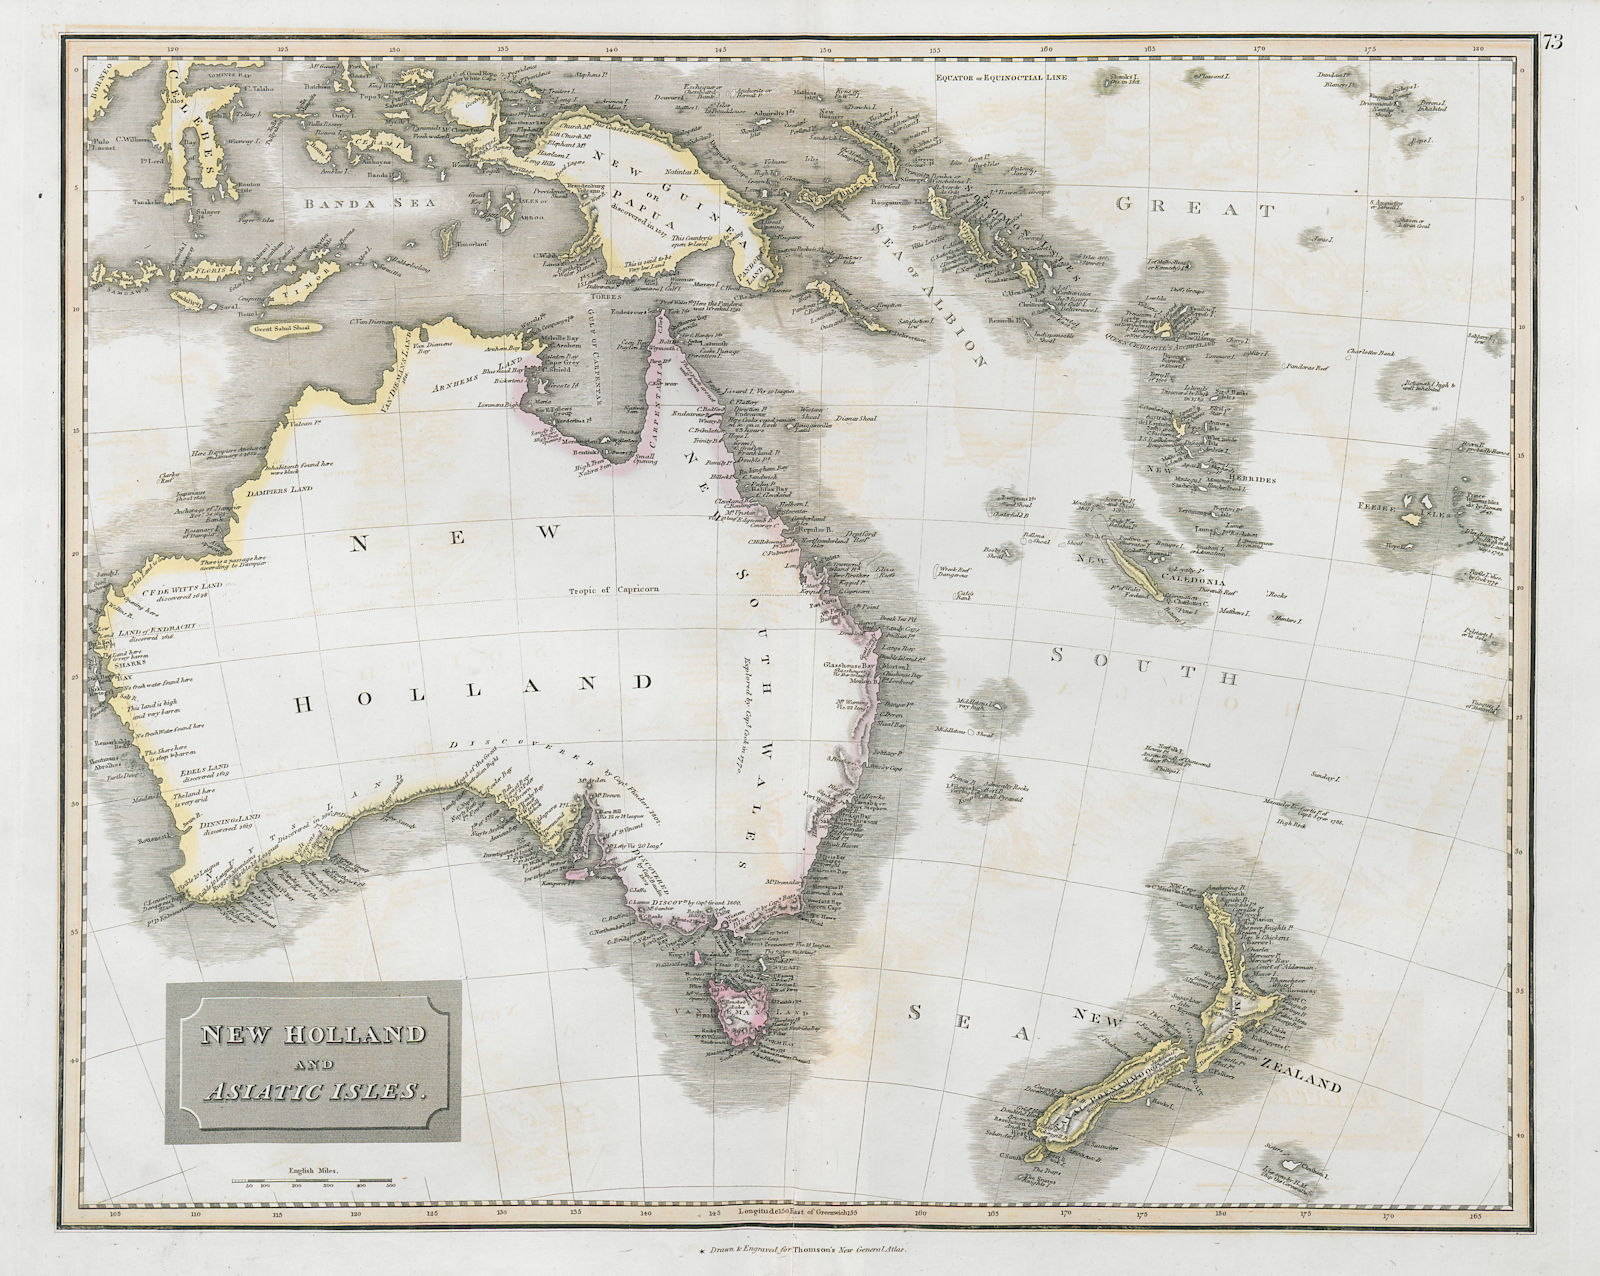 "New Holland & Asiatic islands" Australia New Zealand Melanesia THOMSON 1830 map